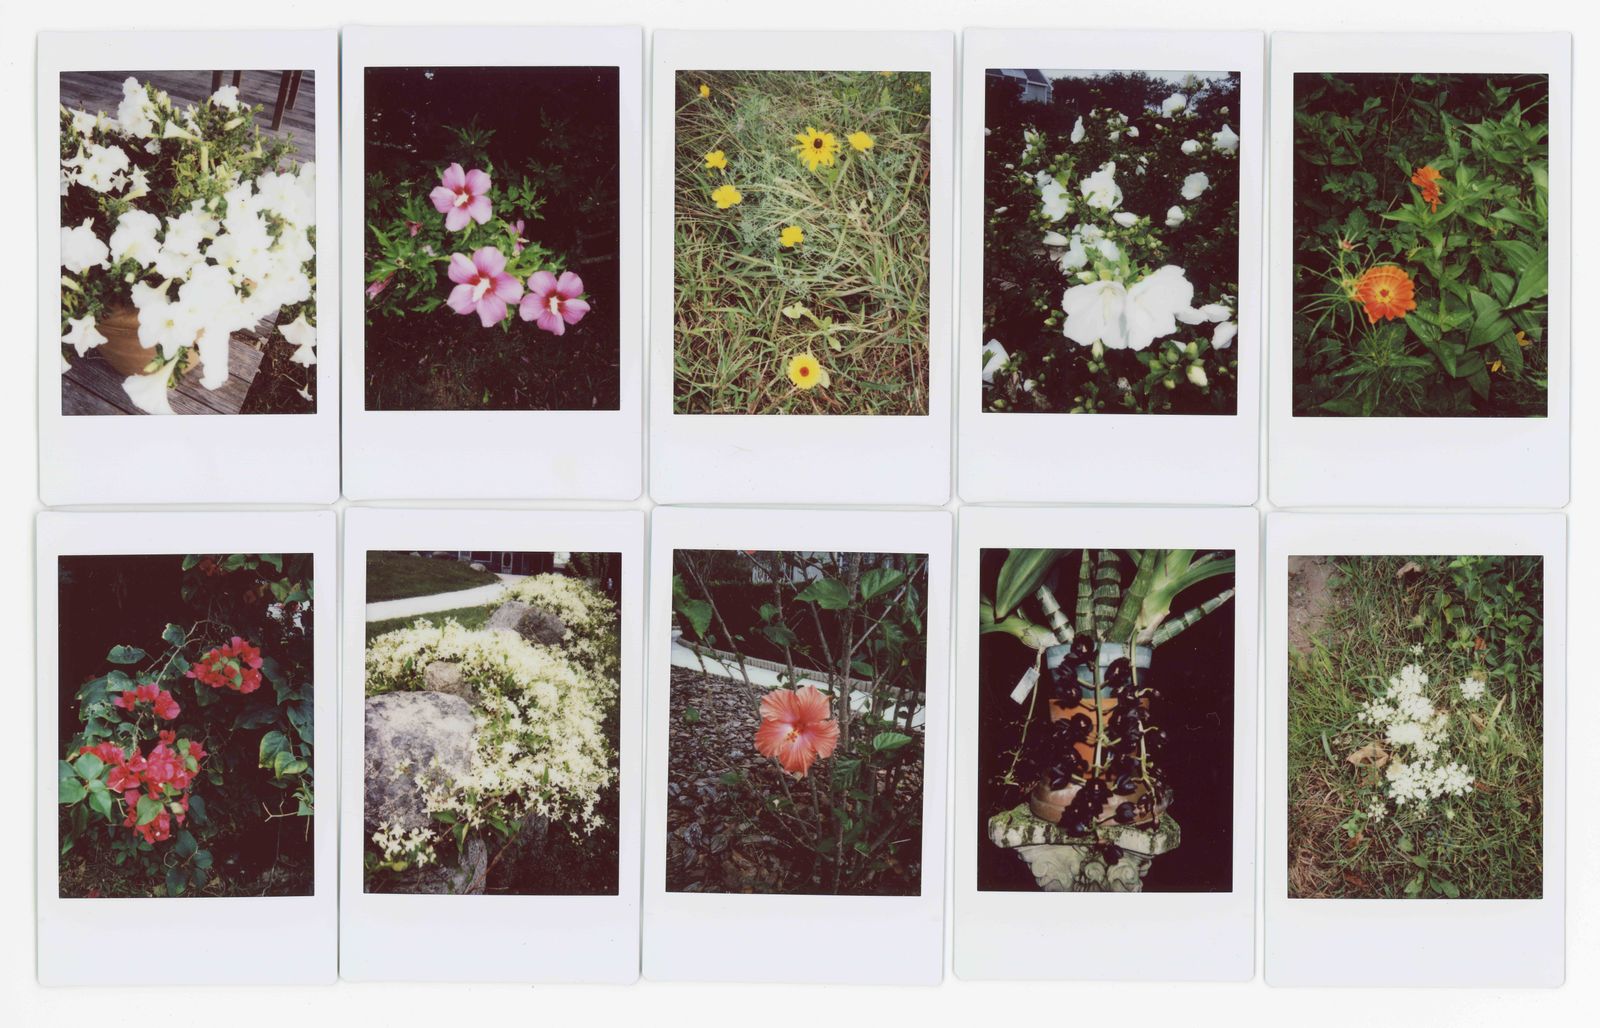 © RACHEL TREIDE - "A Minute Fraction of All the Flowers I've Ever Seen," photographs 111-120